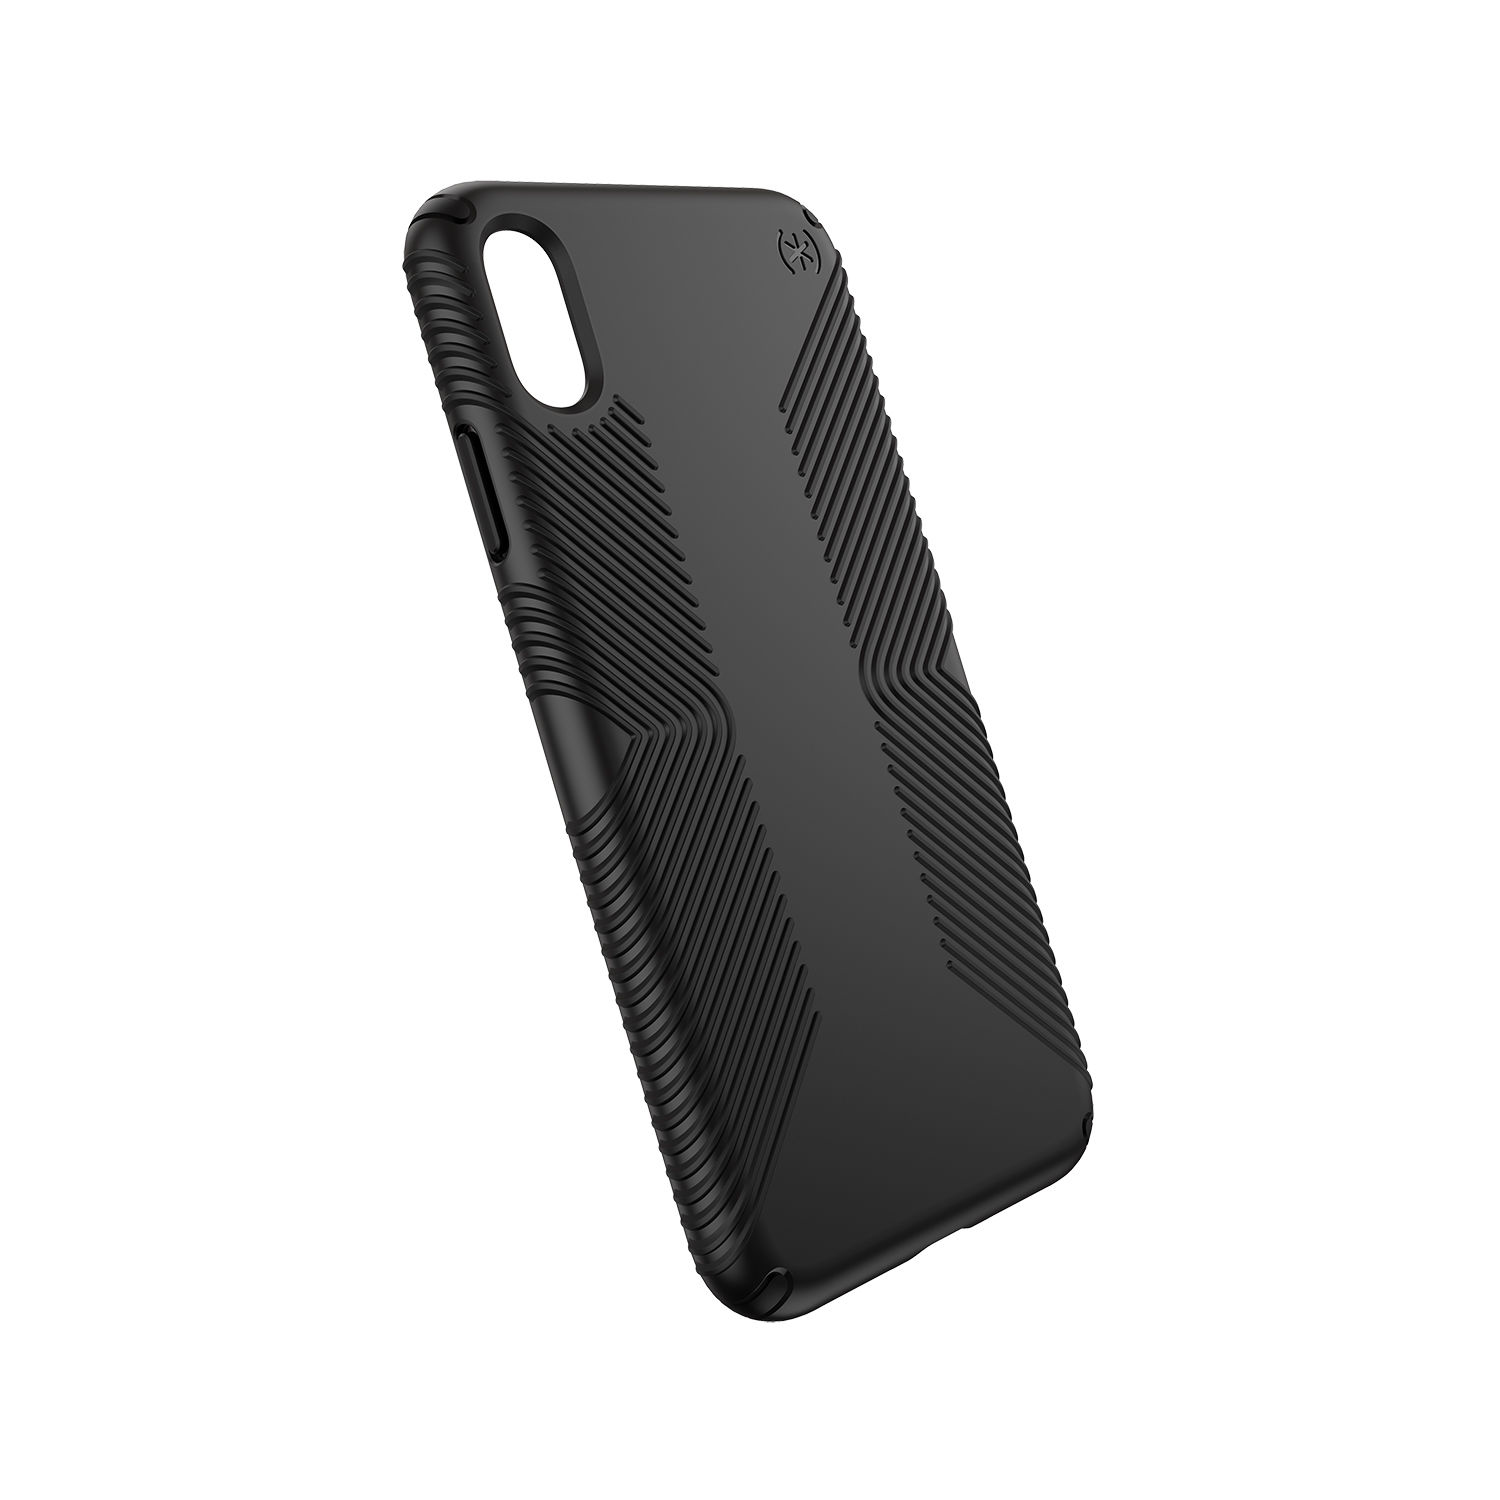 Speck Presidio Grip Case Black/Black for iPhone XS Max